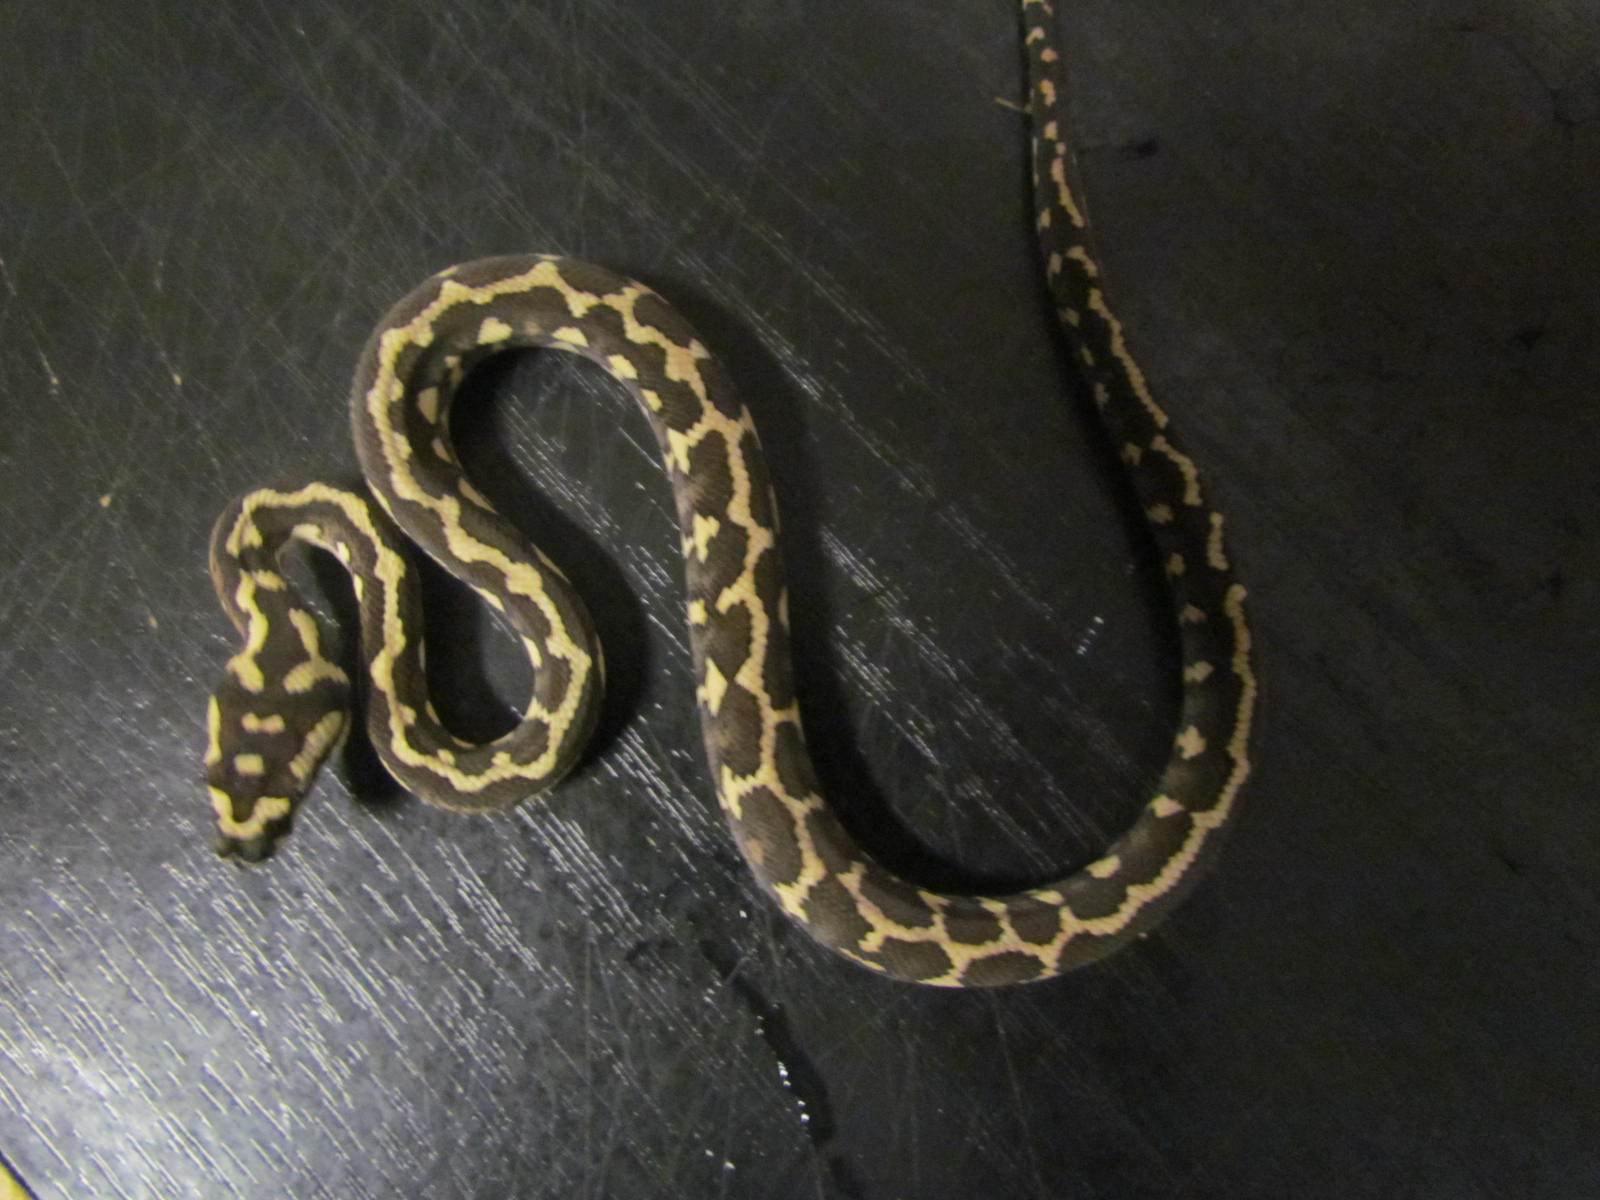 Snake Catcher Snake Removal Melbourne - Amazing Amazon